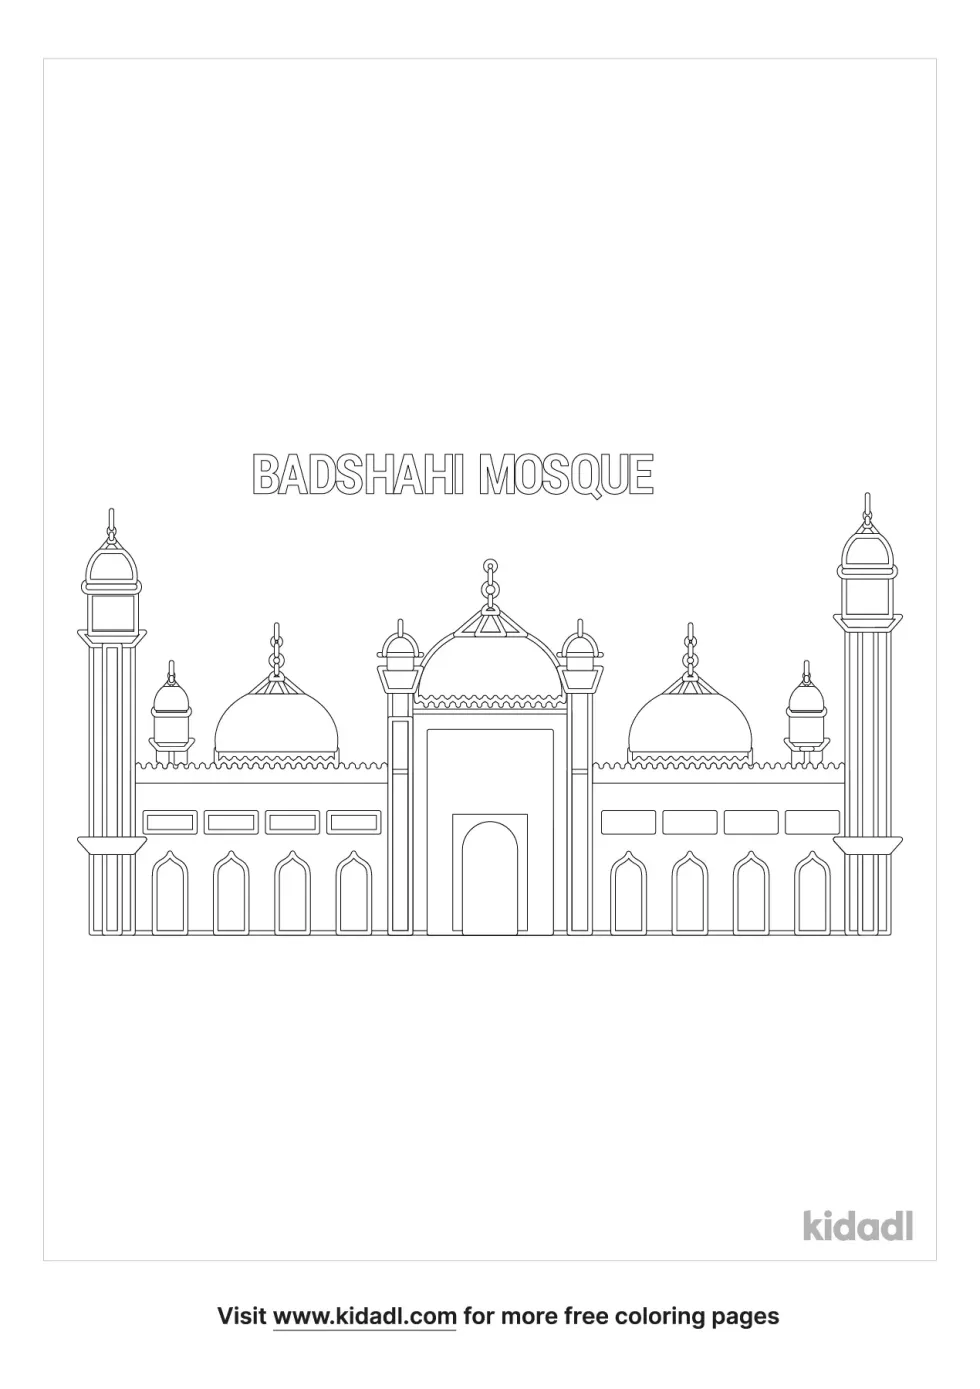 Badshahi Mosque Coloring Page